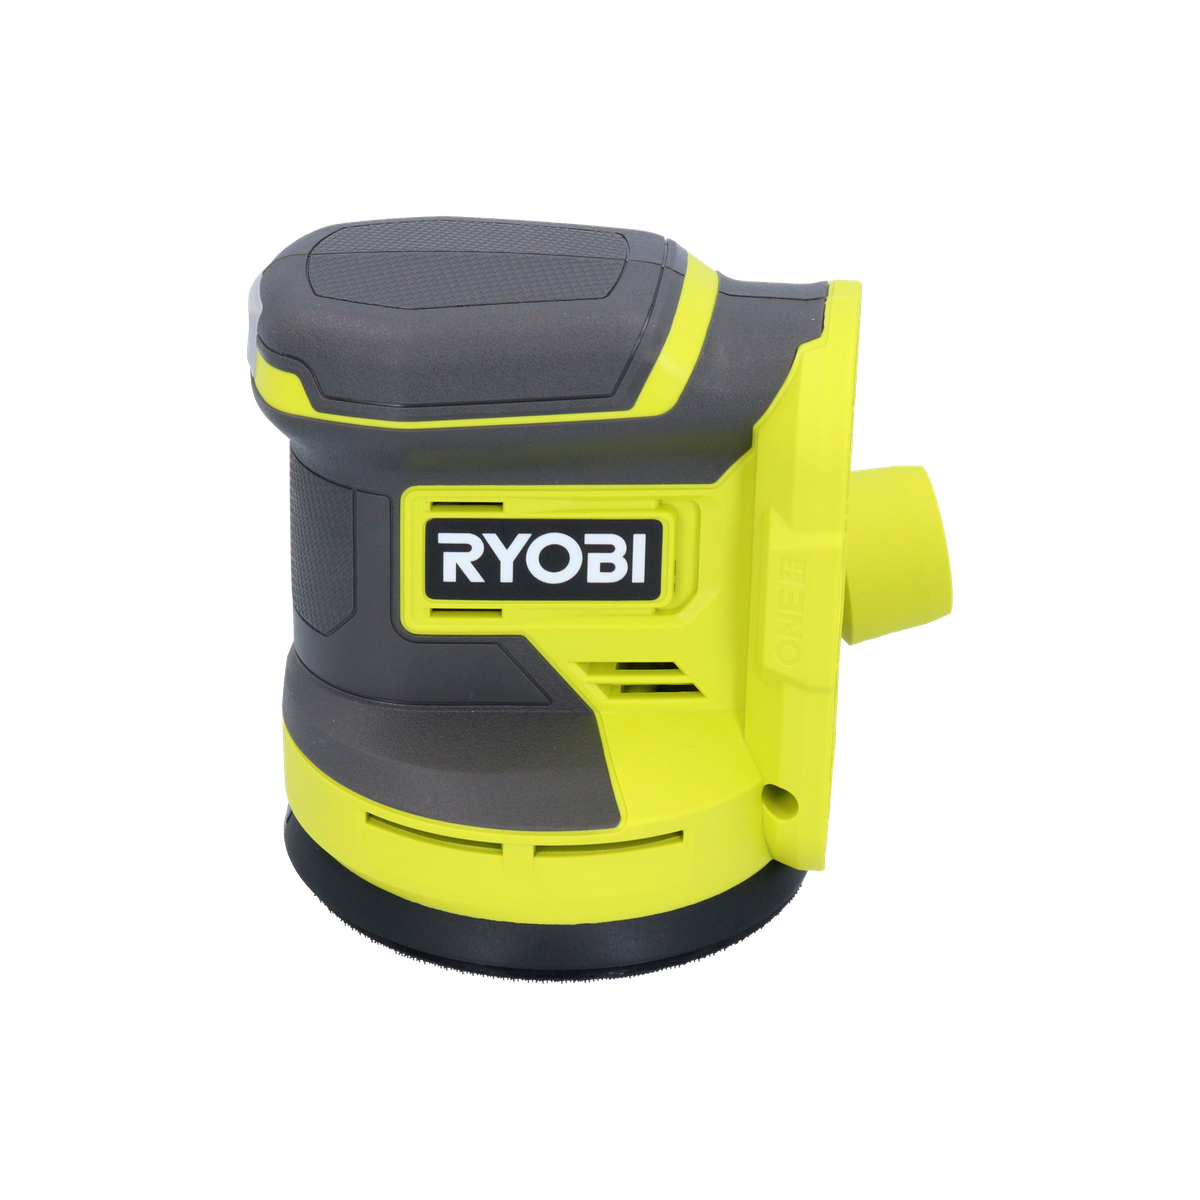 RYOBI RROS18-0 Akku Exzenterschleifer 18 V 125 mm ( 5133005393 ) Solo - ohne Akku, ohne Ladegerät